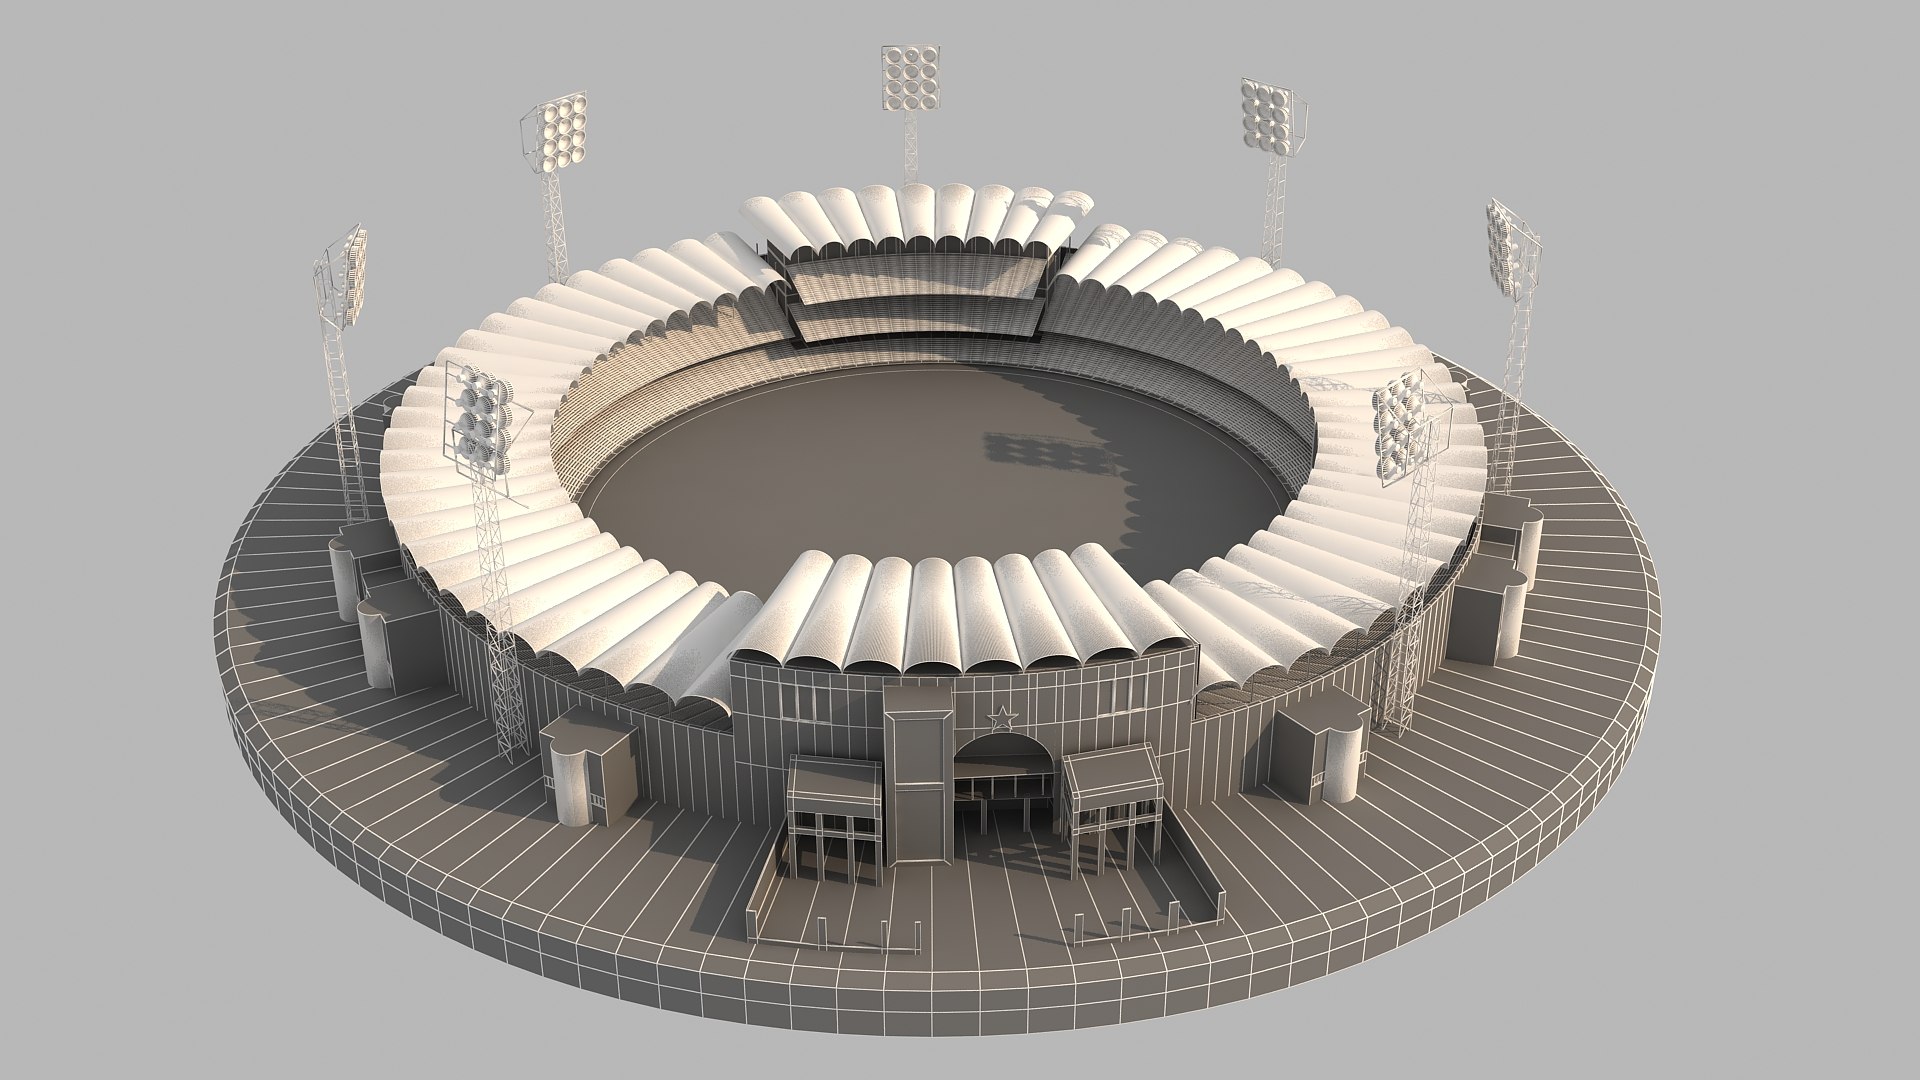 Cricket qaddafi stadium 3D model - TurboSquid 1671990